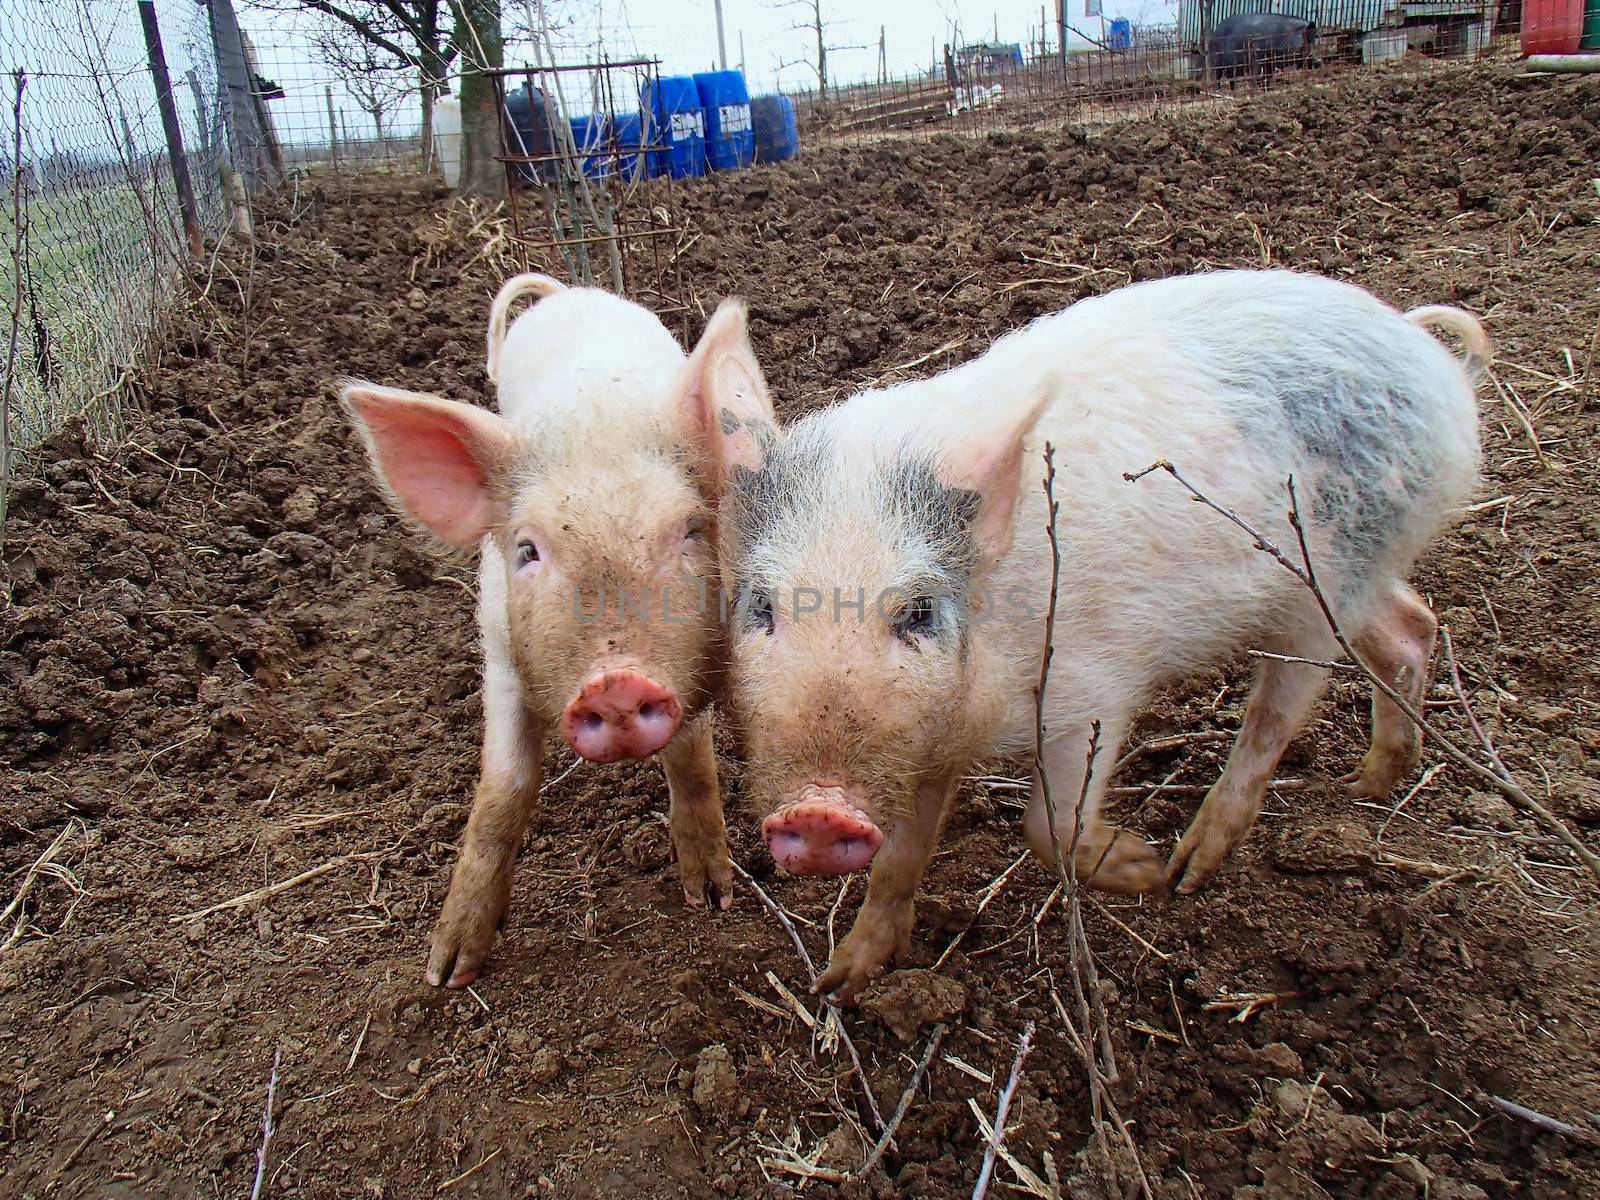 Two cute piggies posing